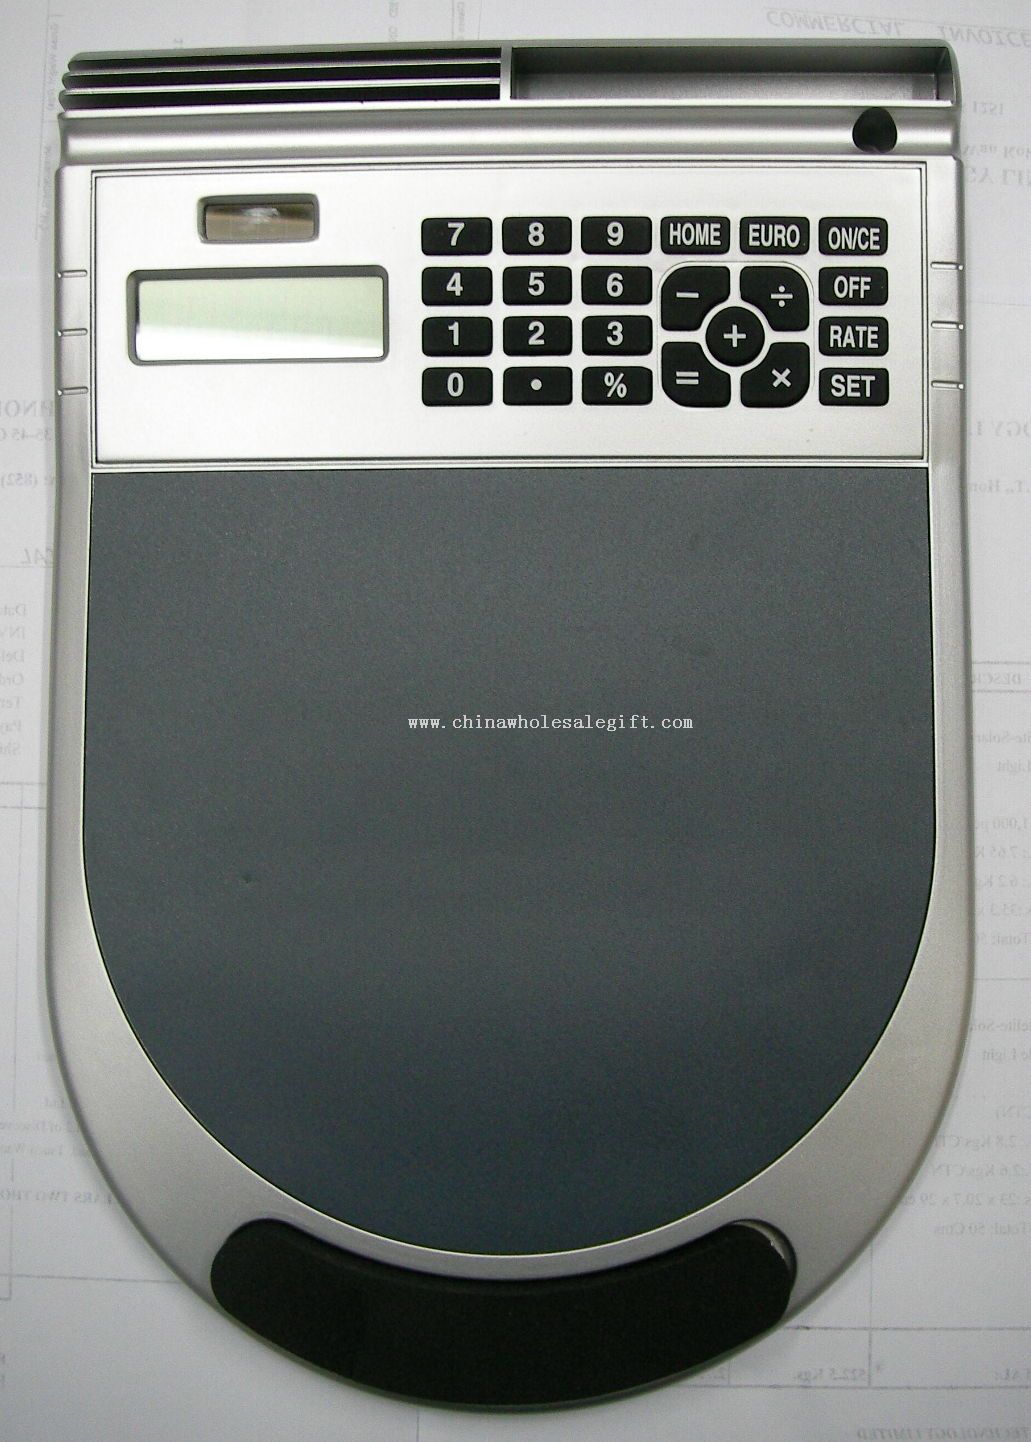 Mousepad Euro hesap makinesi